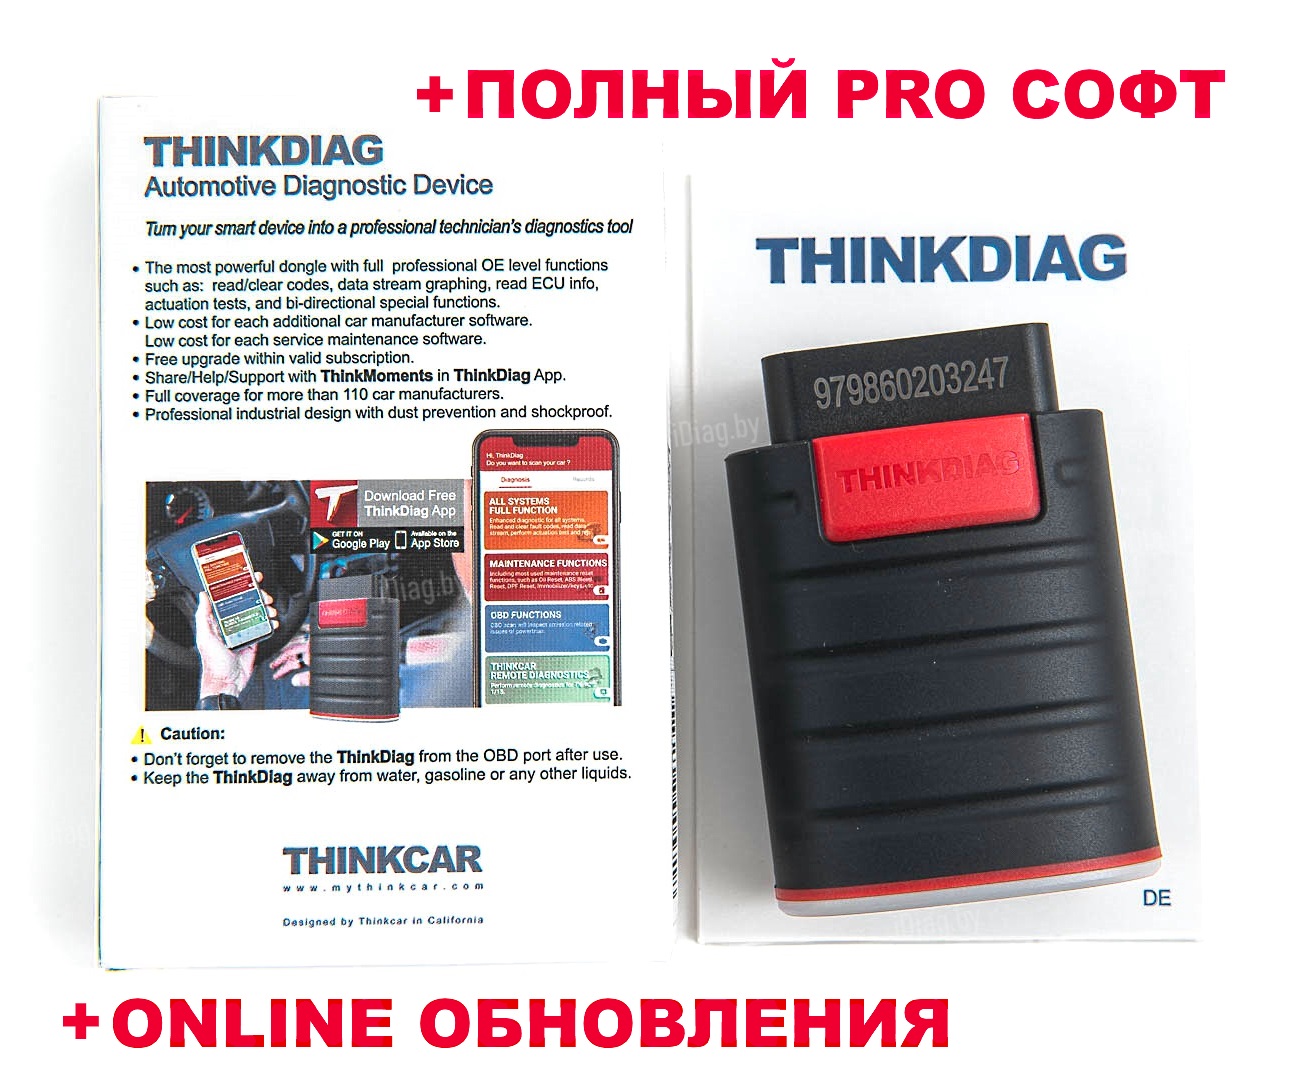 ThinkDiag - EasyDiag 4.0 полный PRO софт online